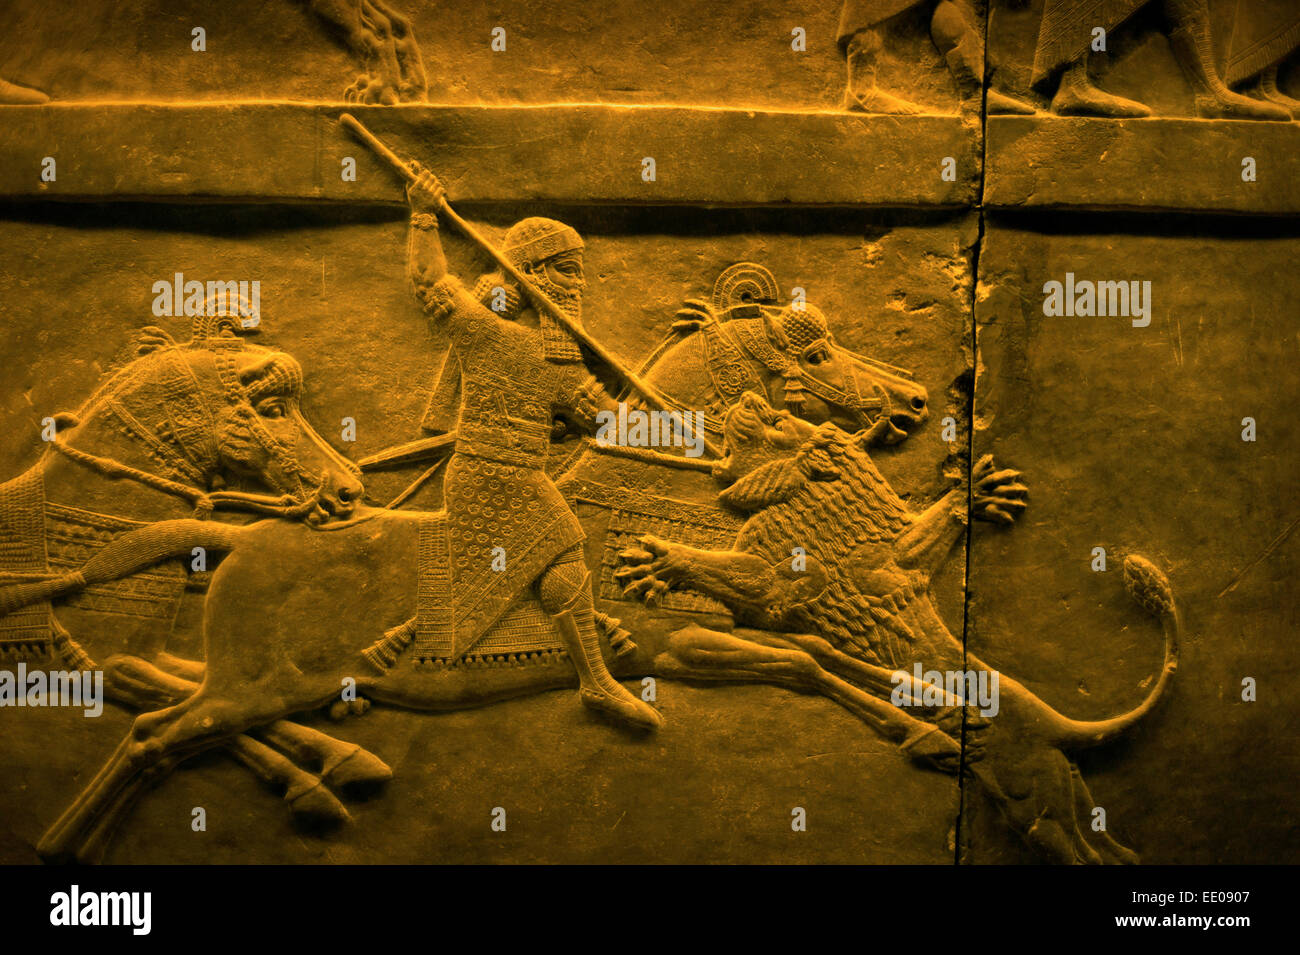 British Museum, London England UK. Assyrische Löwenjagd. Januar 2015 König Ashurbanipal Jagd Löwen. Bas-Relief-Panel geschnitzt. Stockfoto